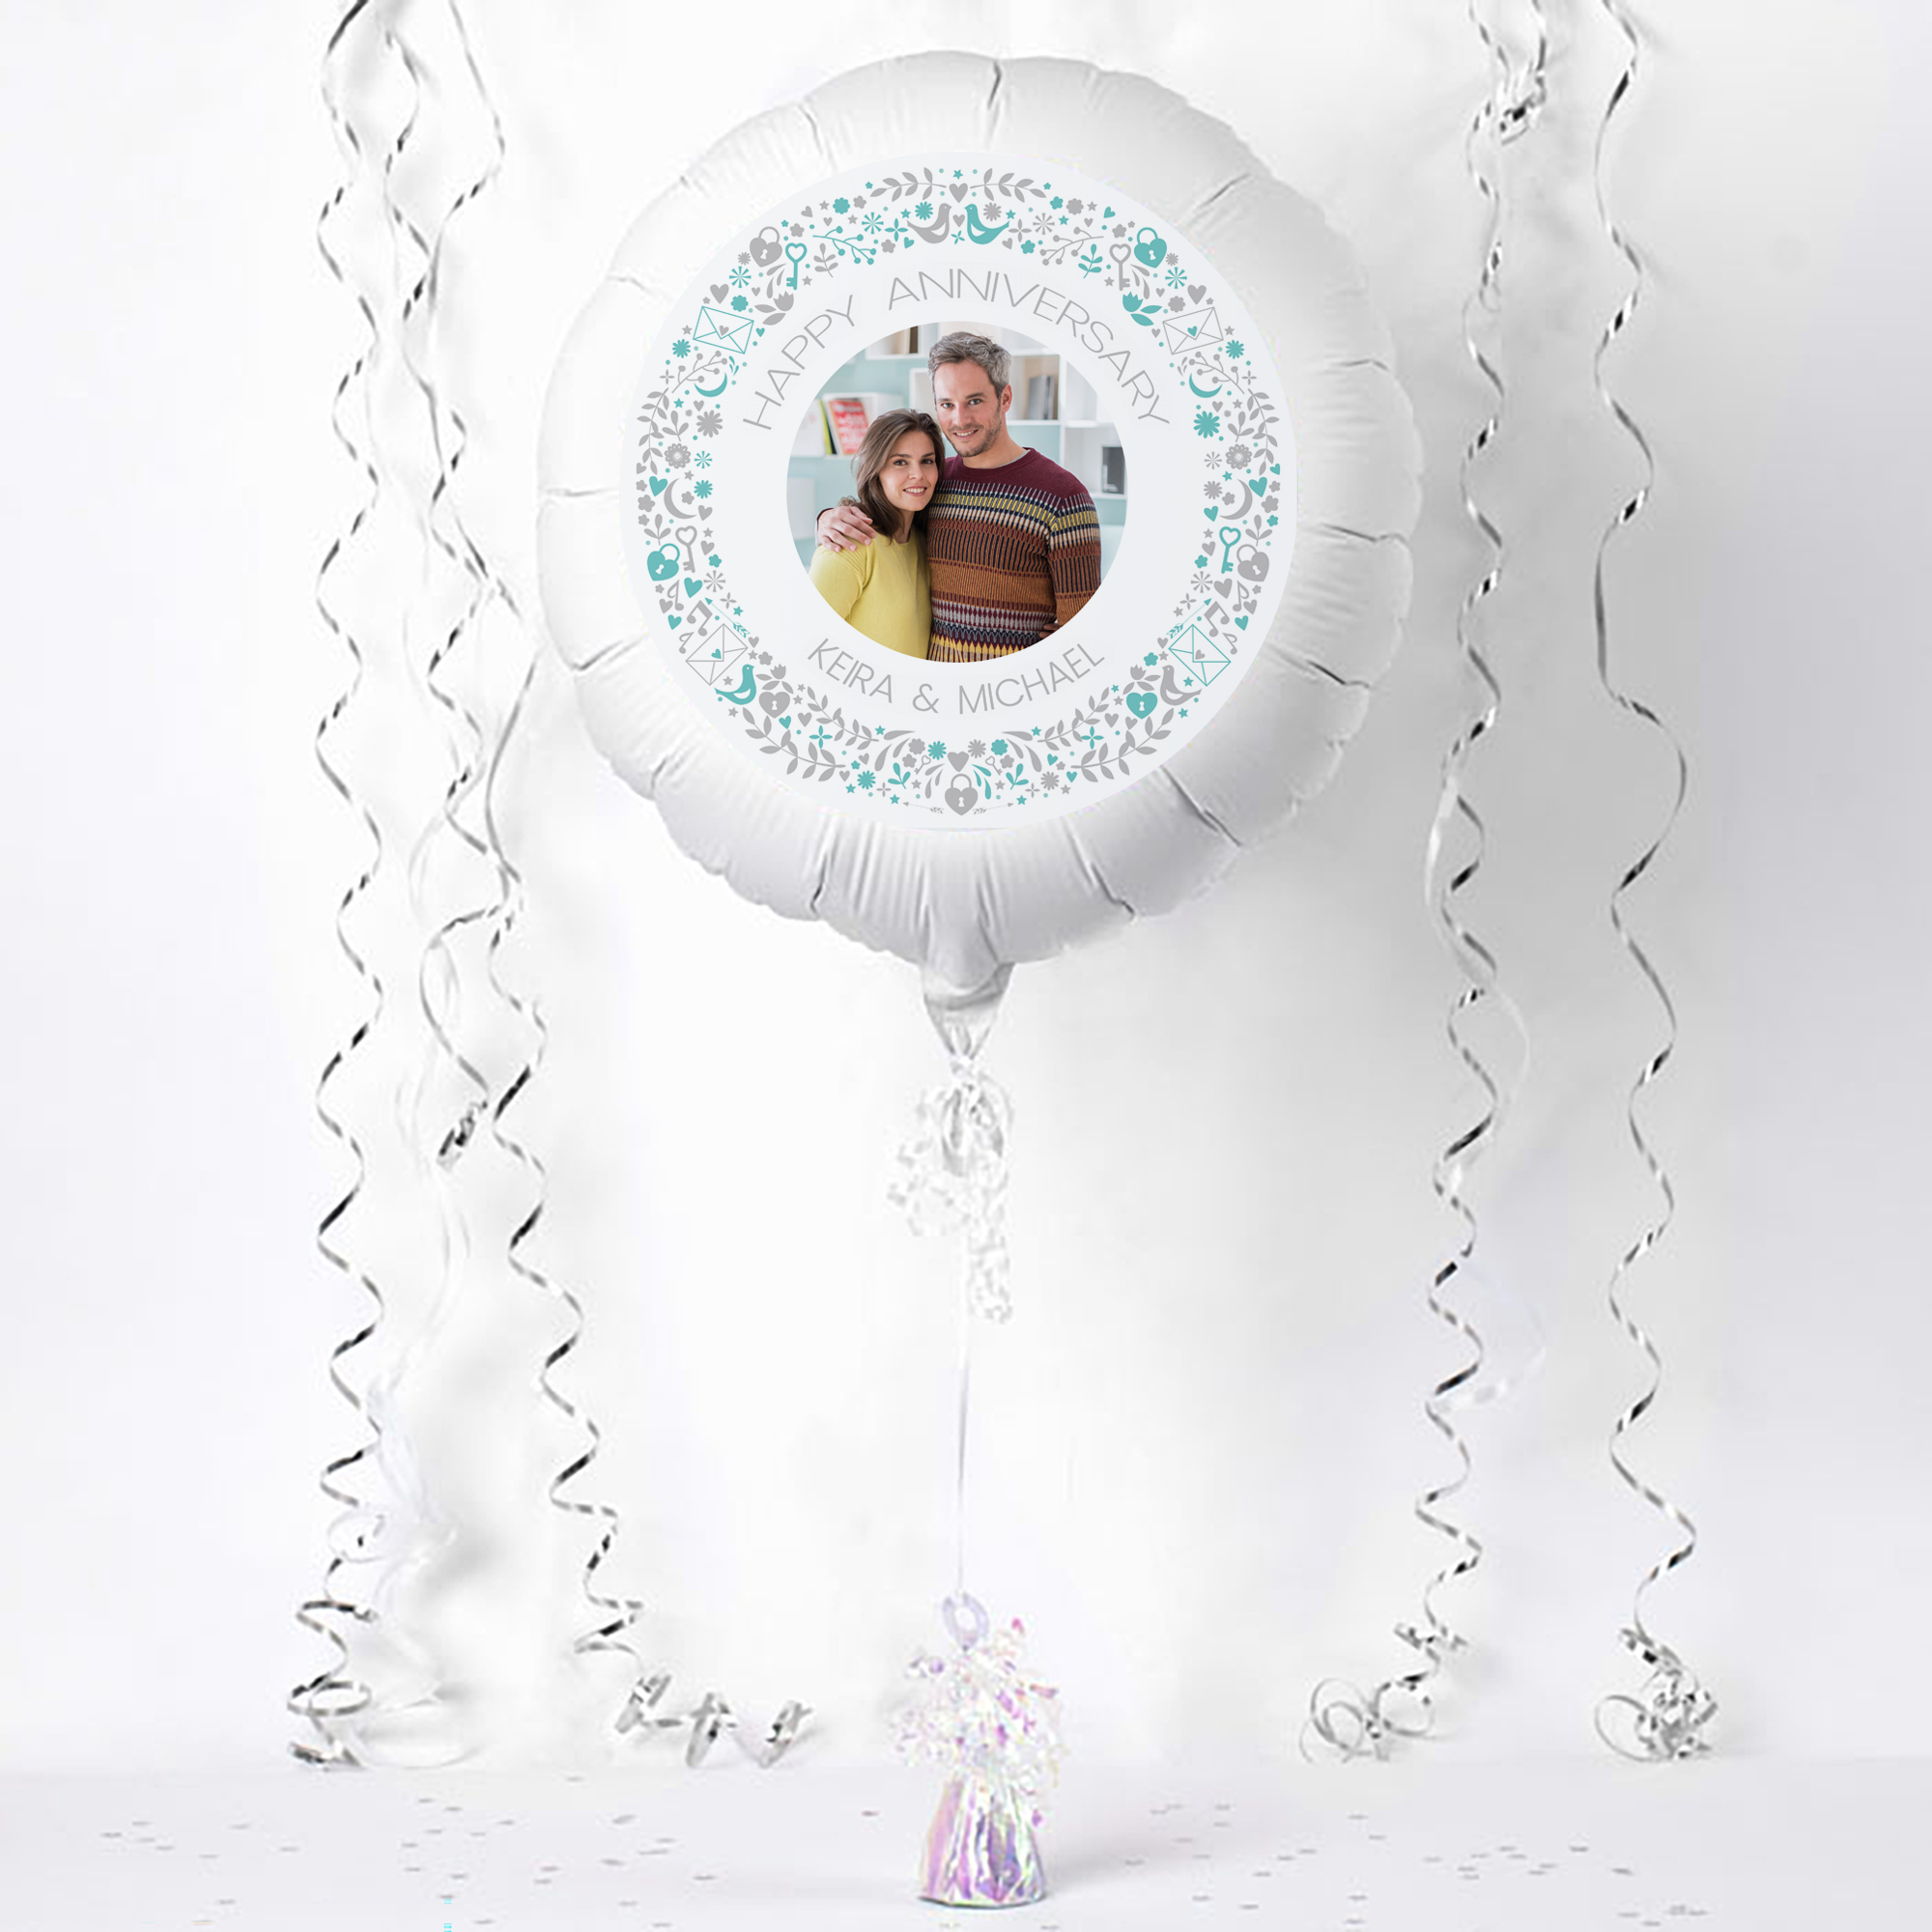 Personalised Photo Upload Large Helium Balloon - Heart Border, Any Message